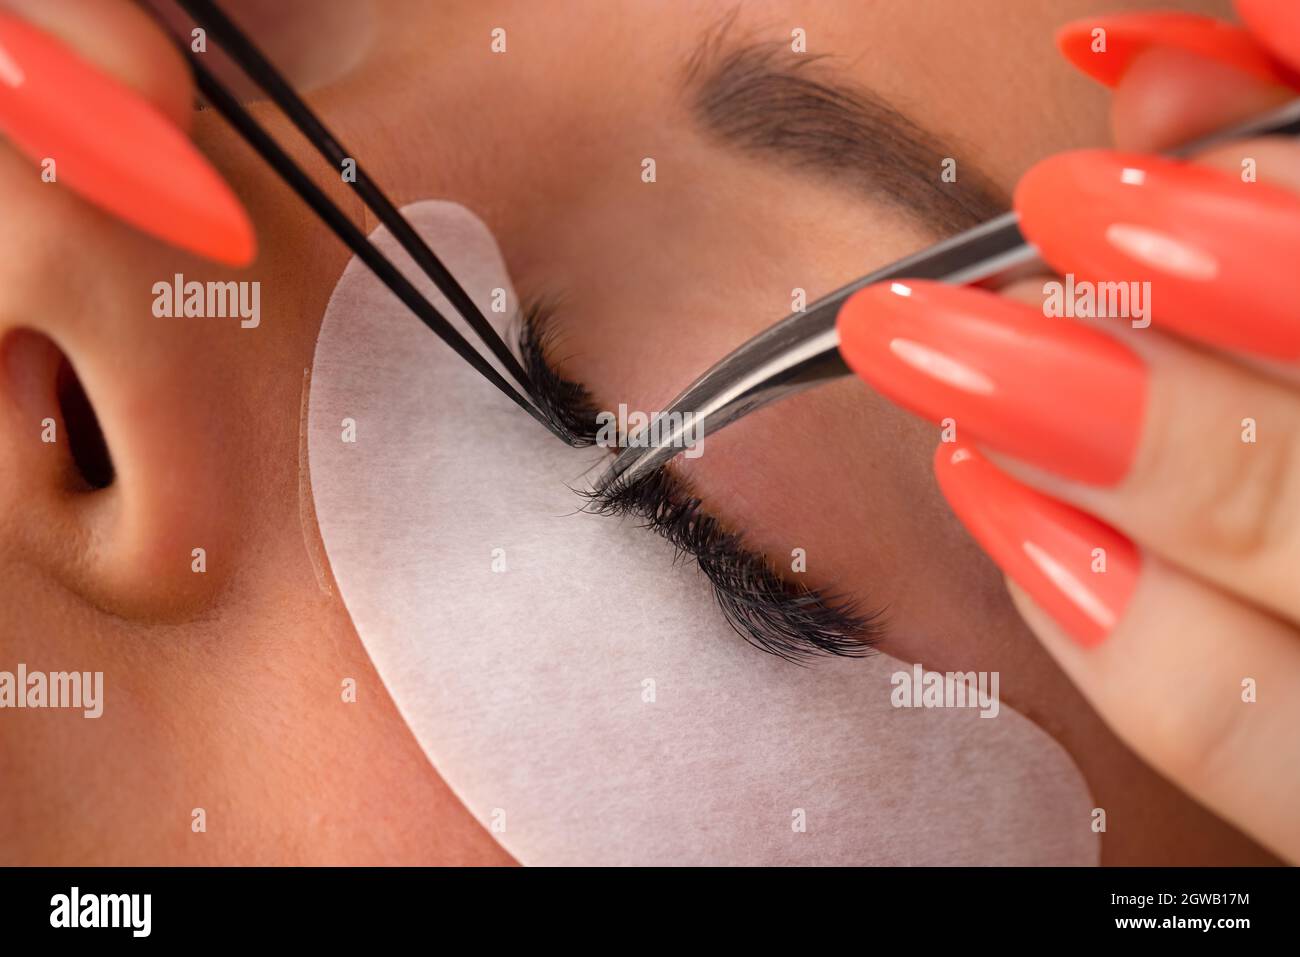 Hands Of Cosmetologist Using Tweezers For Applying False Eyelashes Stock Photo